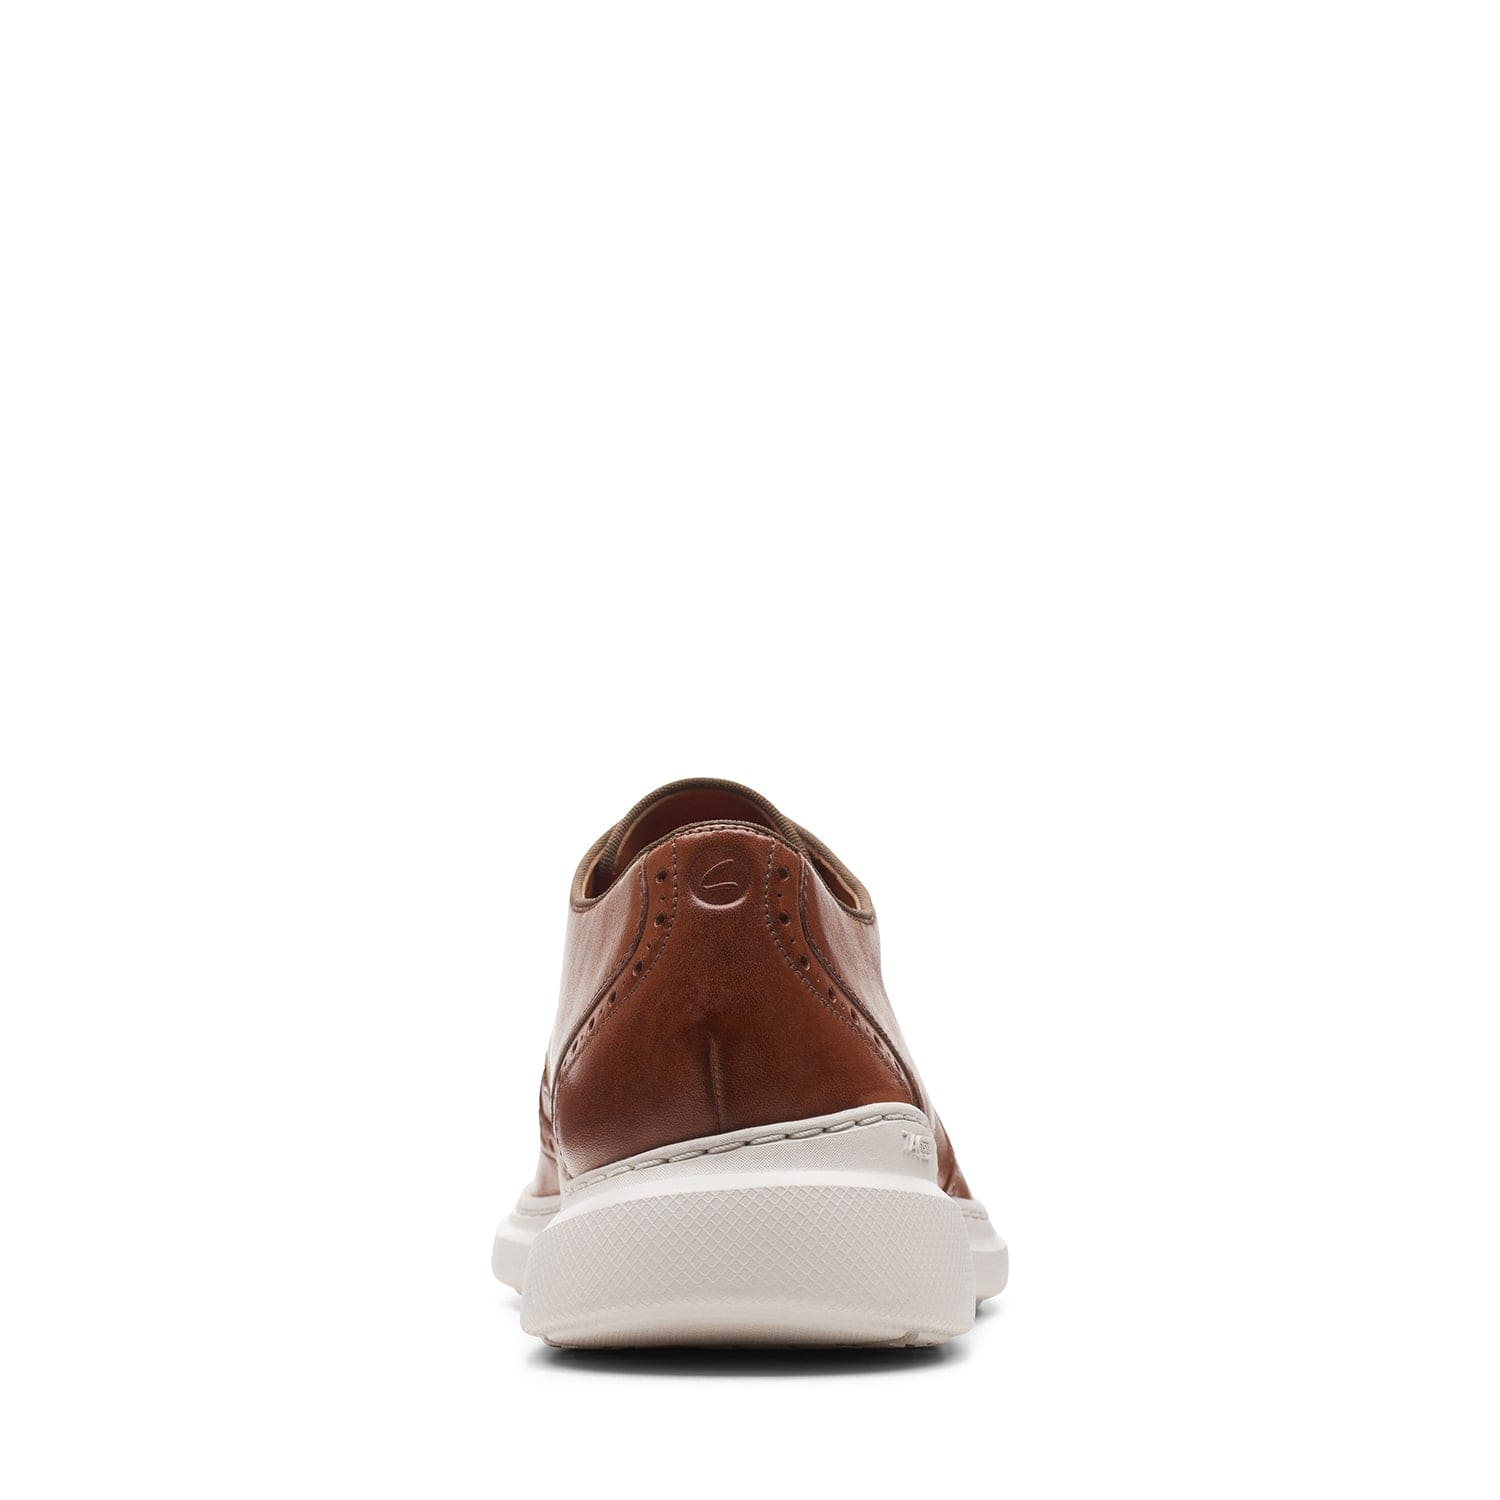 Clarks Dennet Wing Shoes - Dark Tan Leather - 261629727 - G Width (Standard Fit)